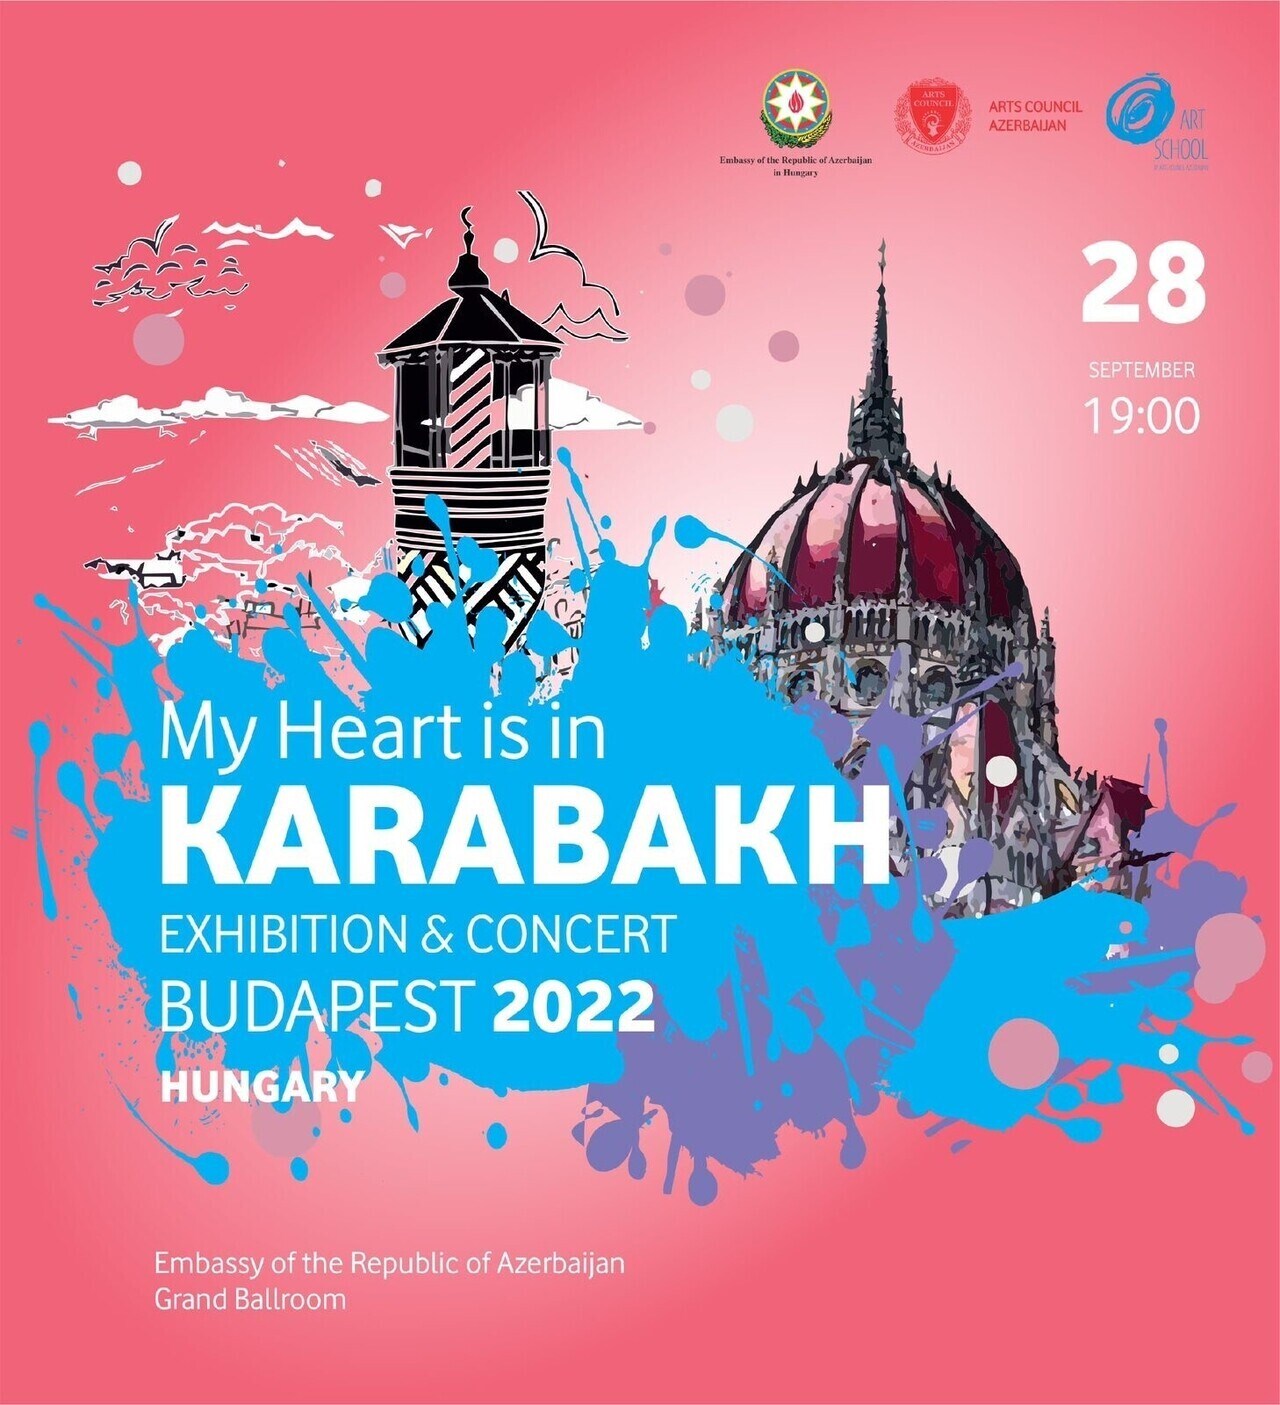 exposition et concert de musique classique ambassade d'azerbaidjan